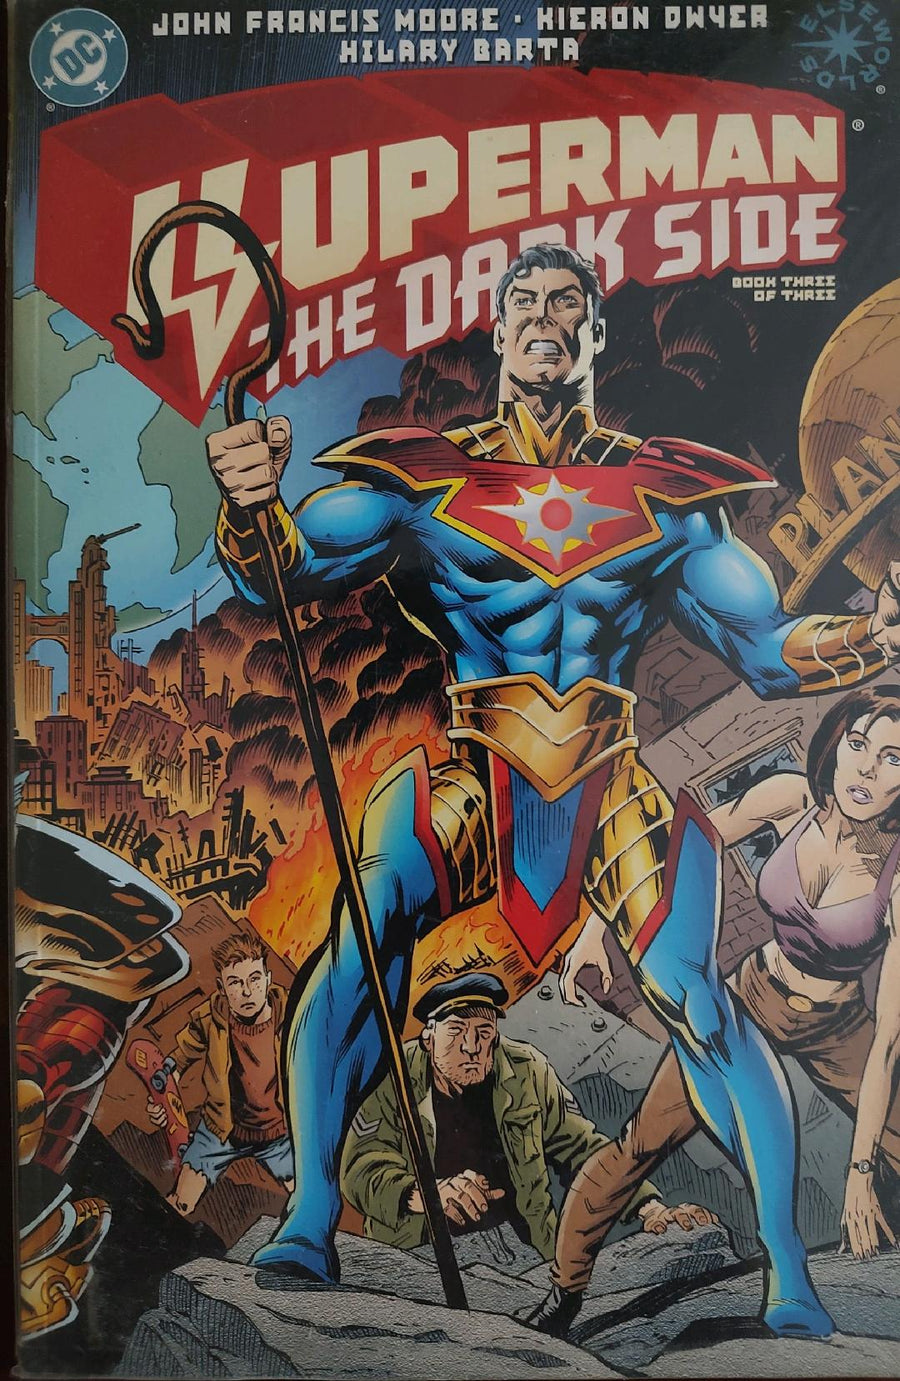 Superman The Dark Side #3